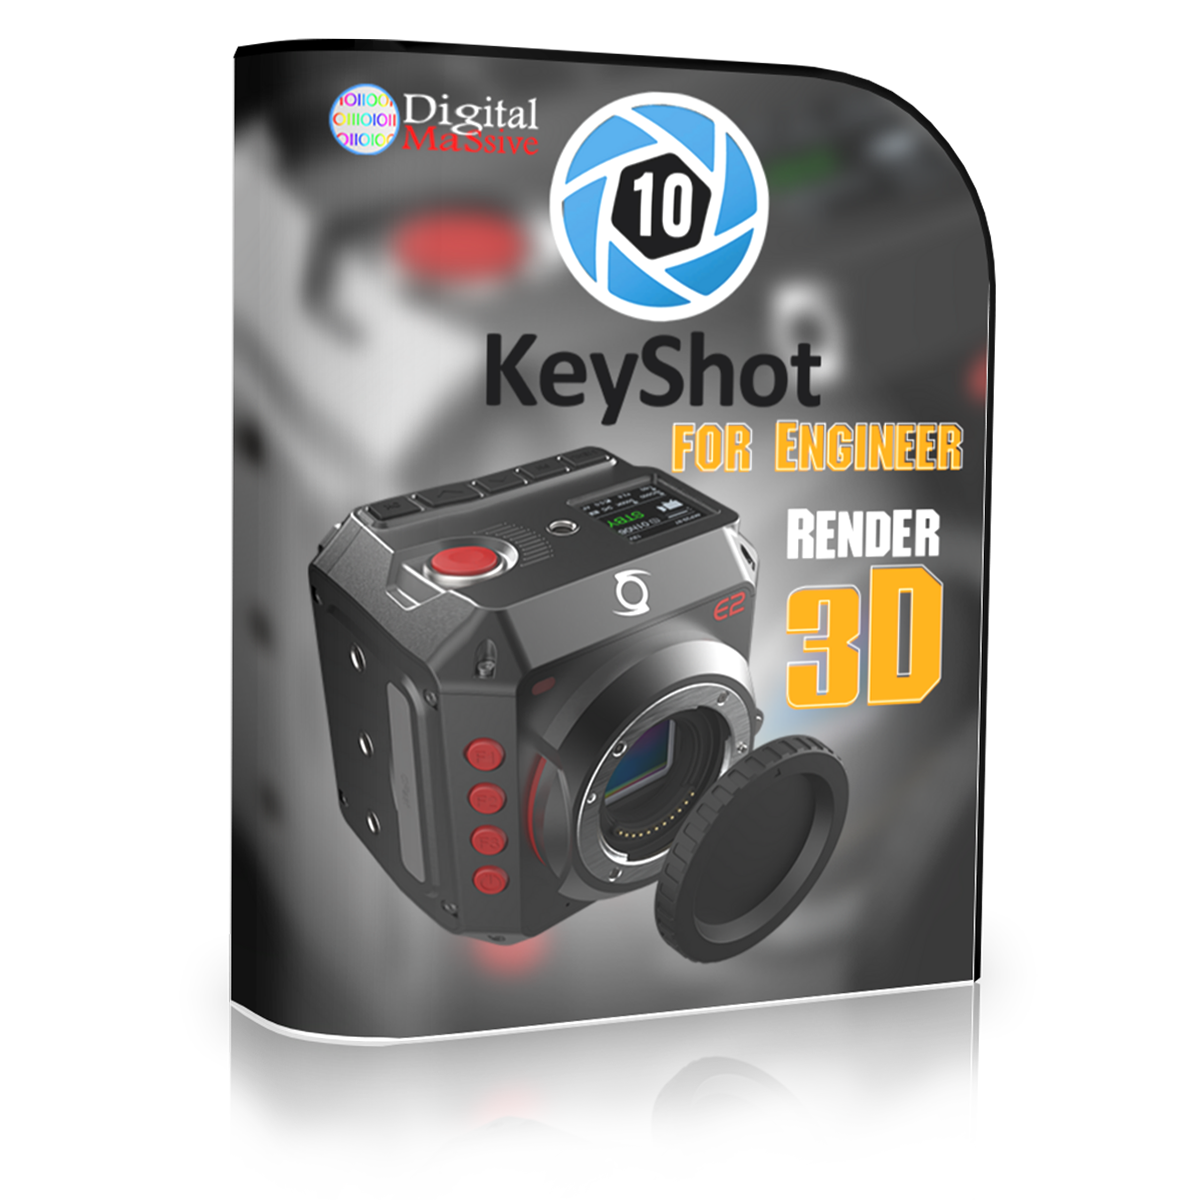 KeyShot 10 for Engineer